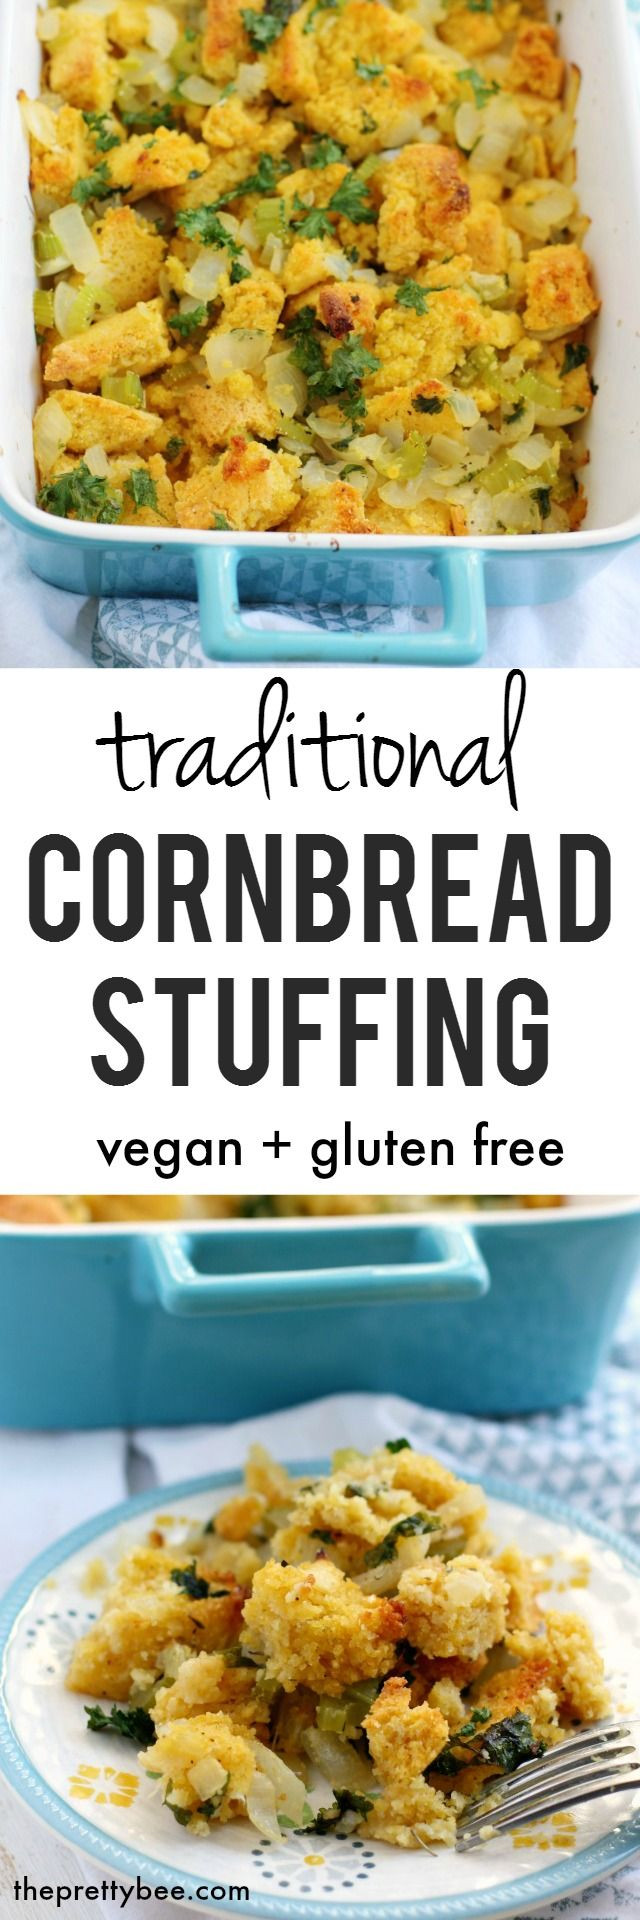 Gluten Free Vegan Thanksgiving
 Best 25 Vegan cornbread ideas on Pinterest